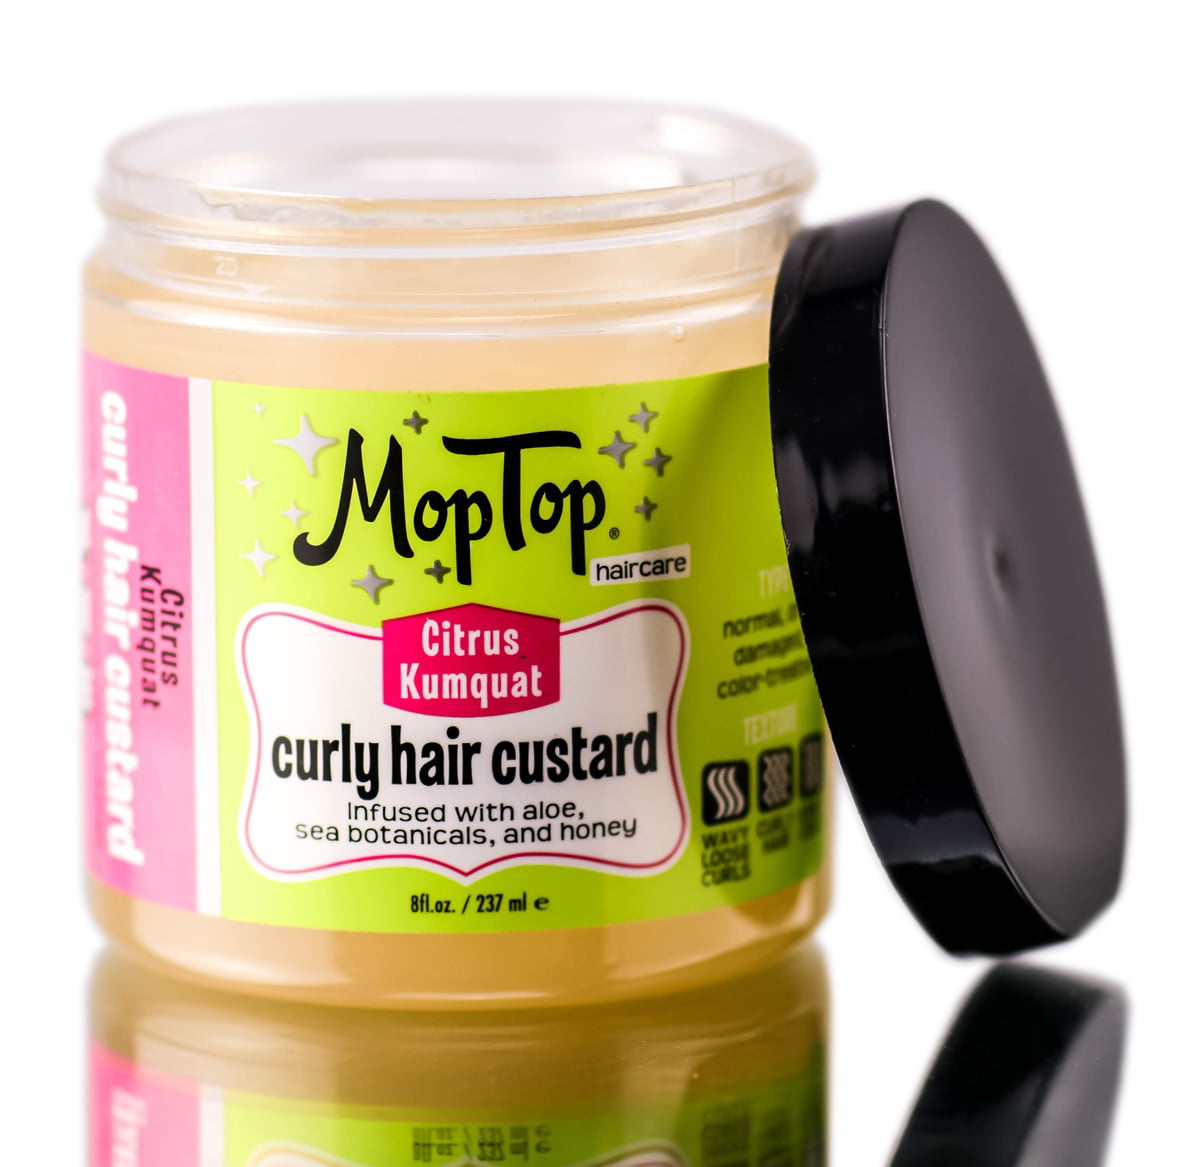 MopTop Citrus Kumquat Curly Hair Custard (Size : 8 oz) 